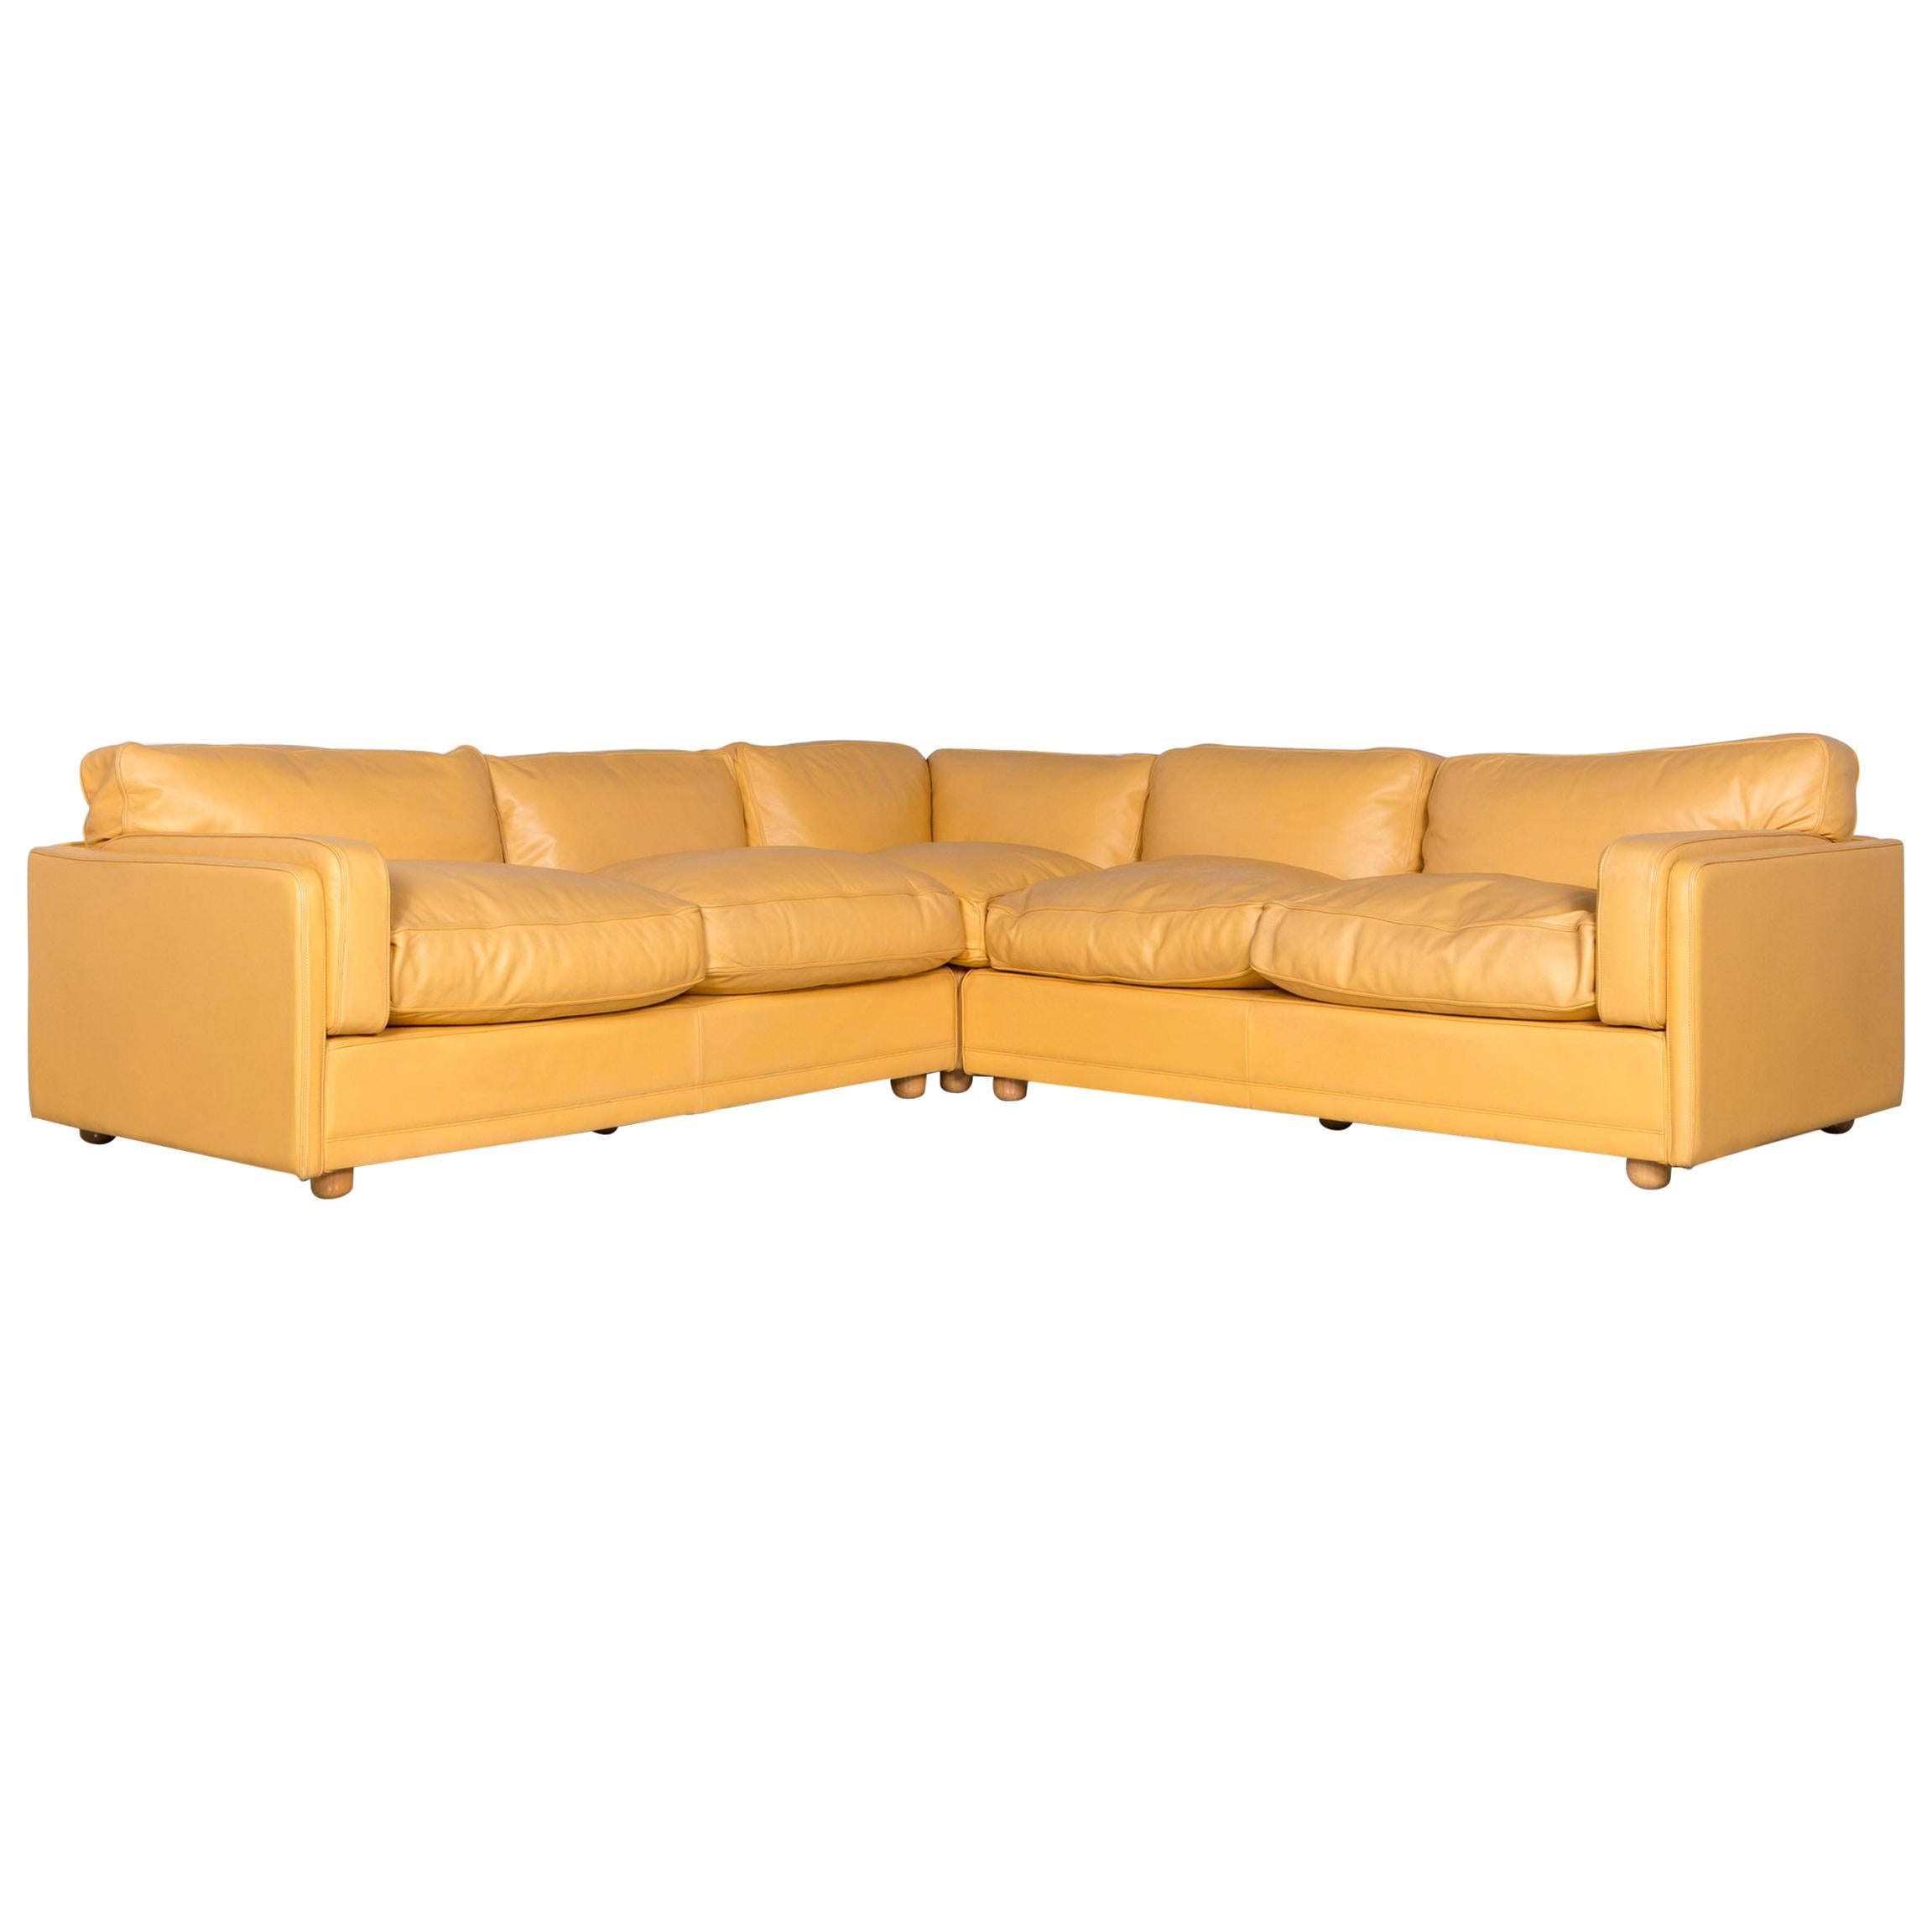 Poltrona Frau Designer Leather Corner Sofa Yellow Genuine Leather Sofa Couch For Sale